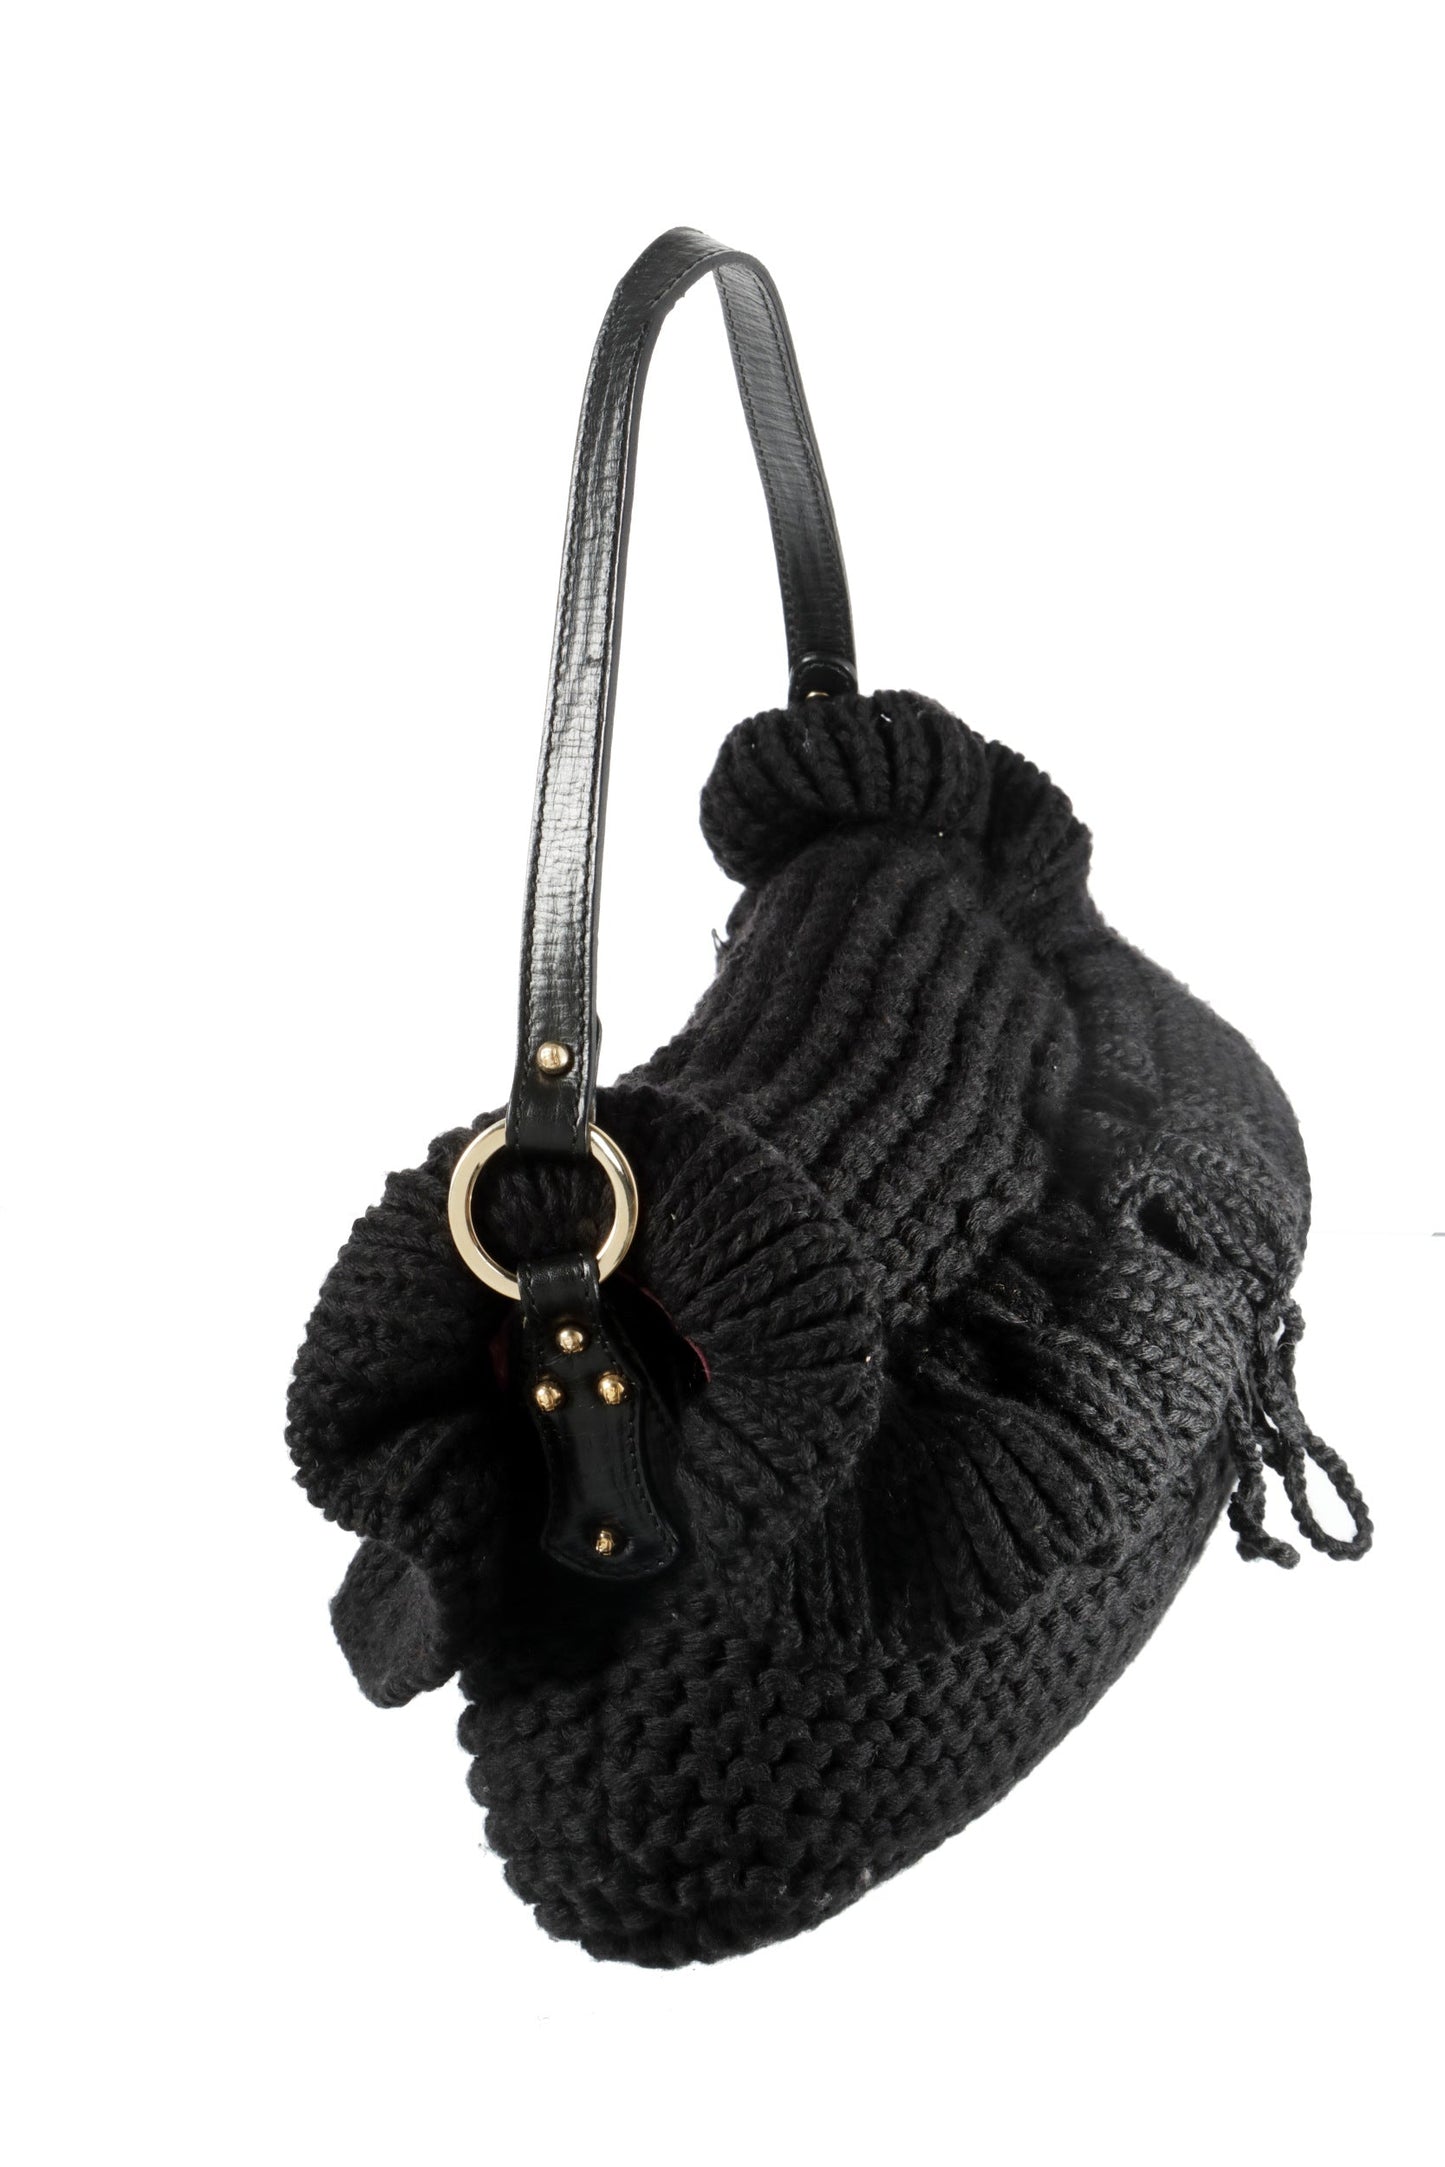 Fendi Chef bag in black knit